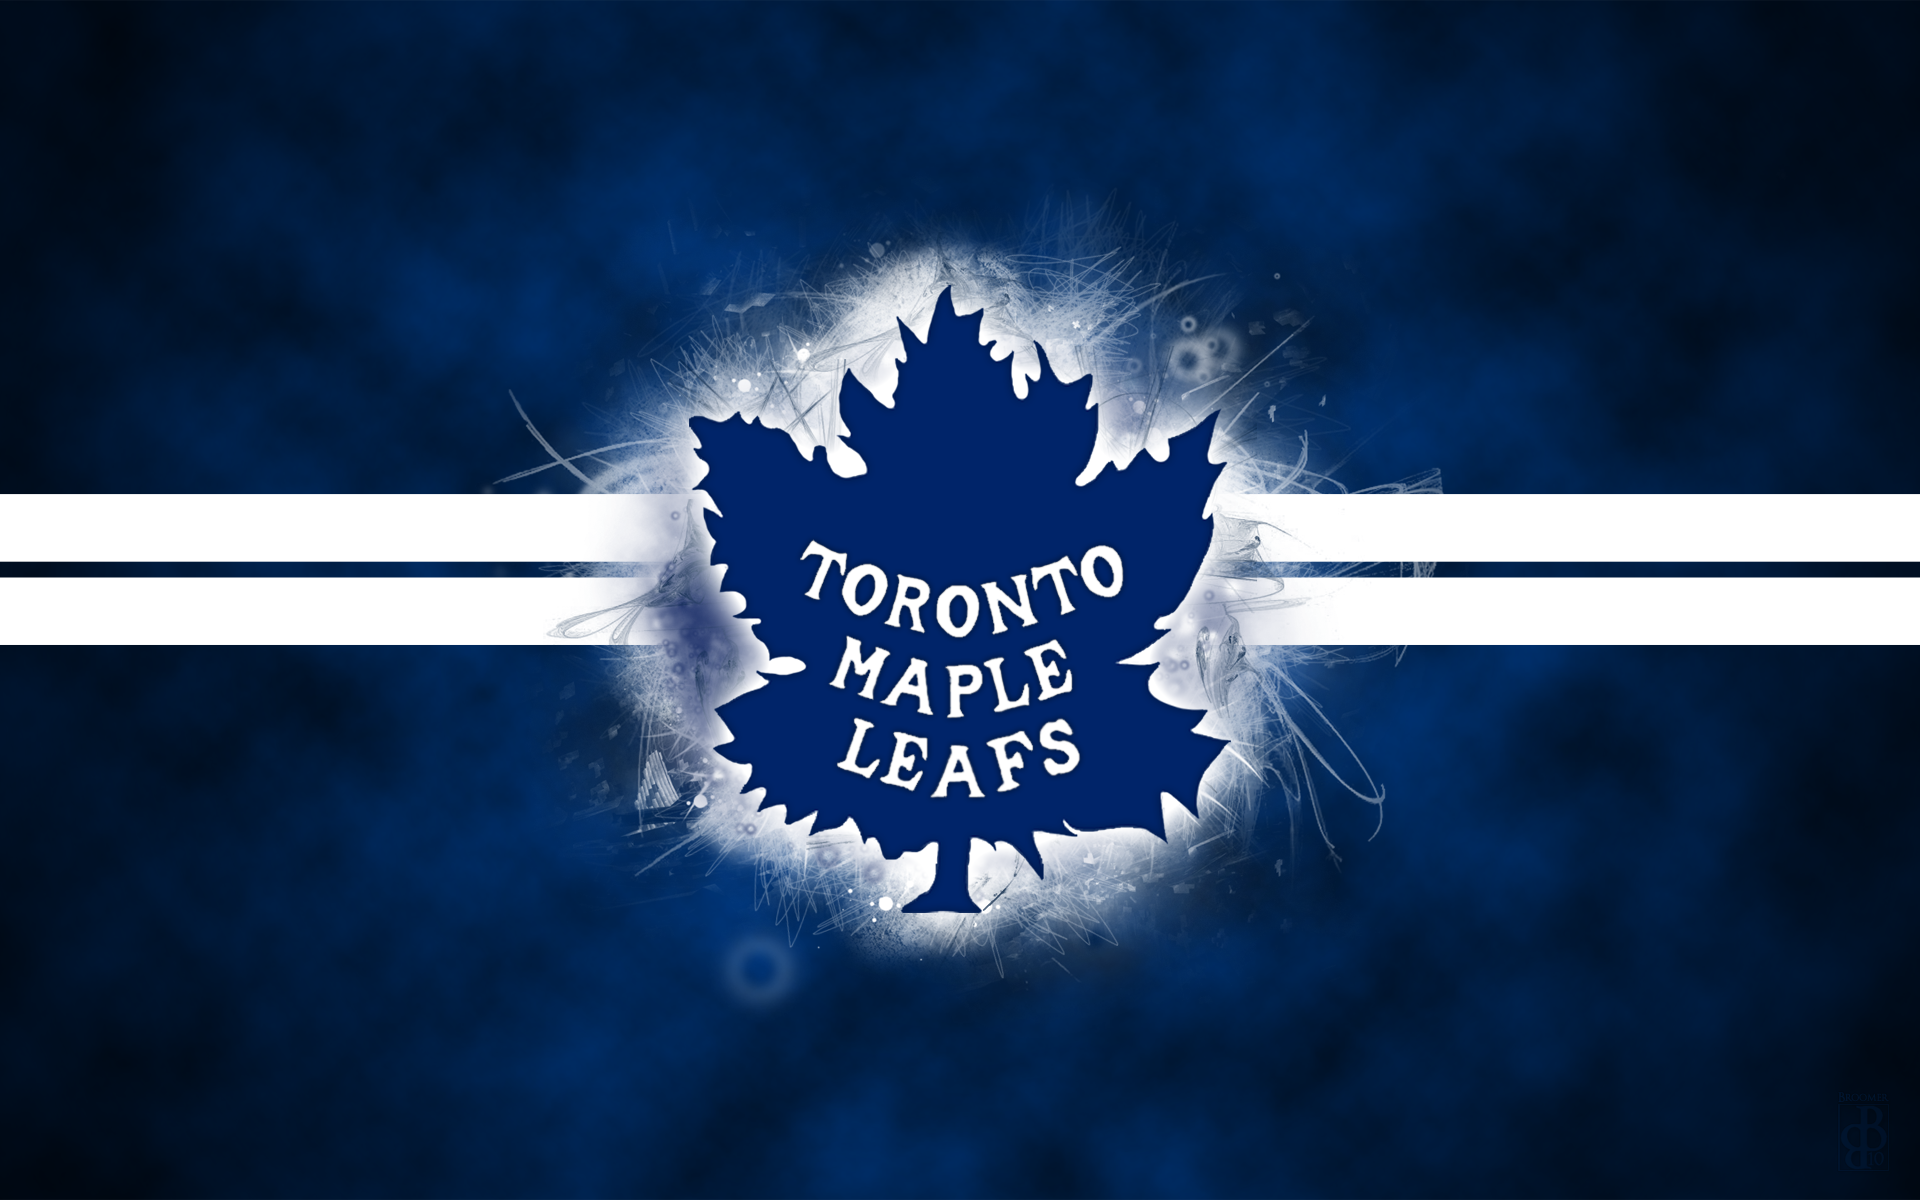 Retro Maple Toronto Leafs Wallpaper Bbboz Art